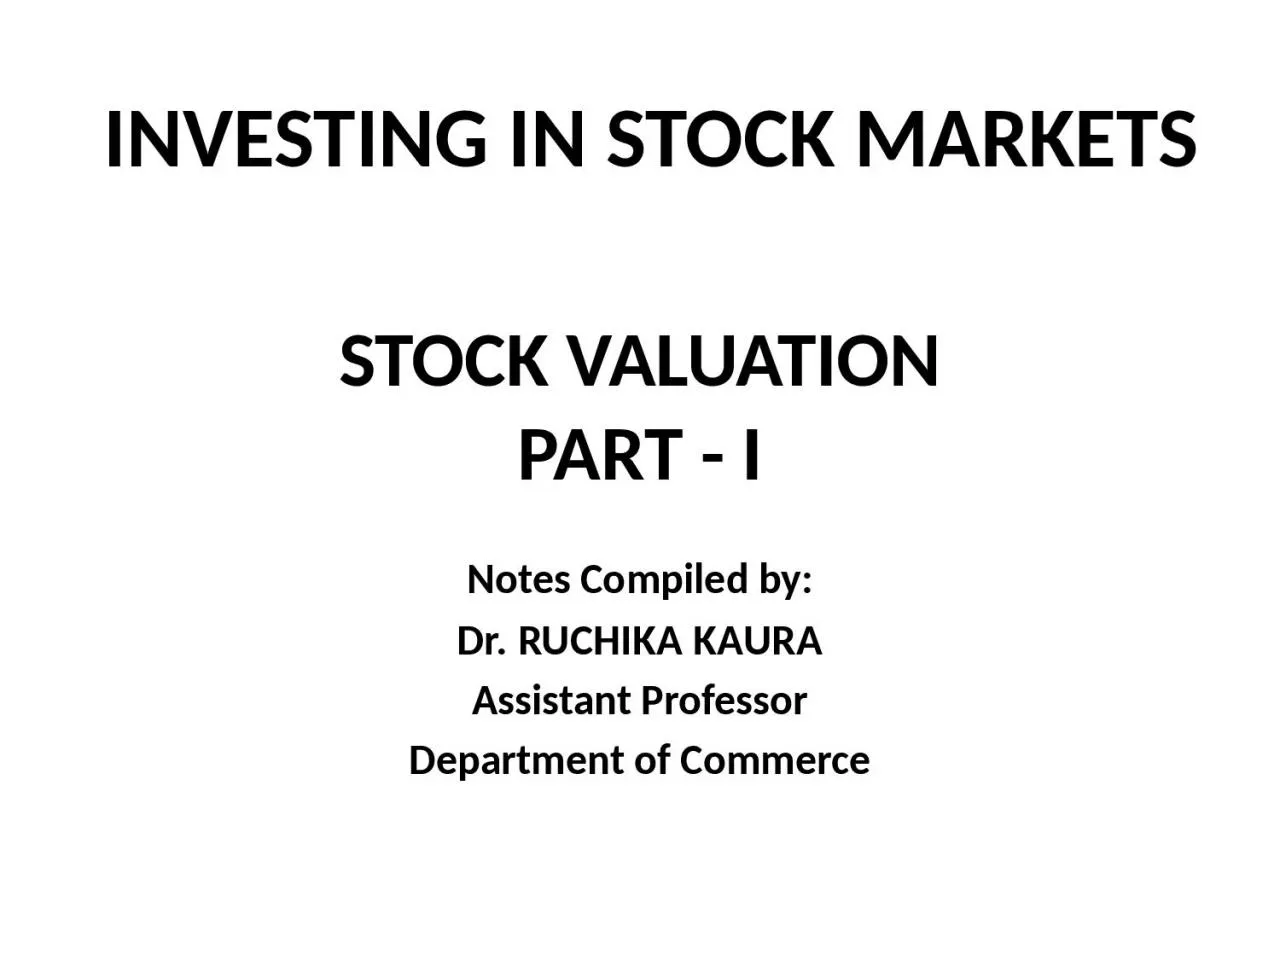 STOCK VALUATION PART - I